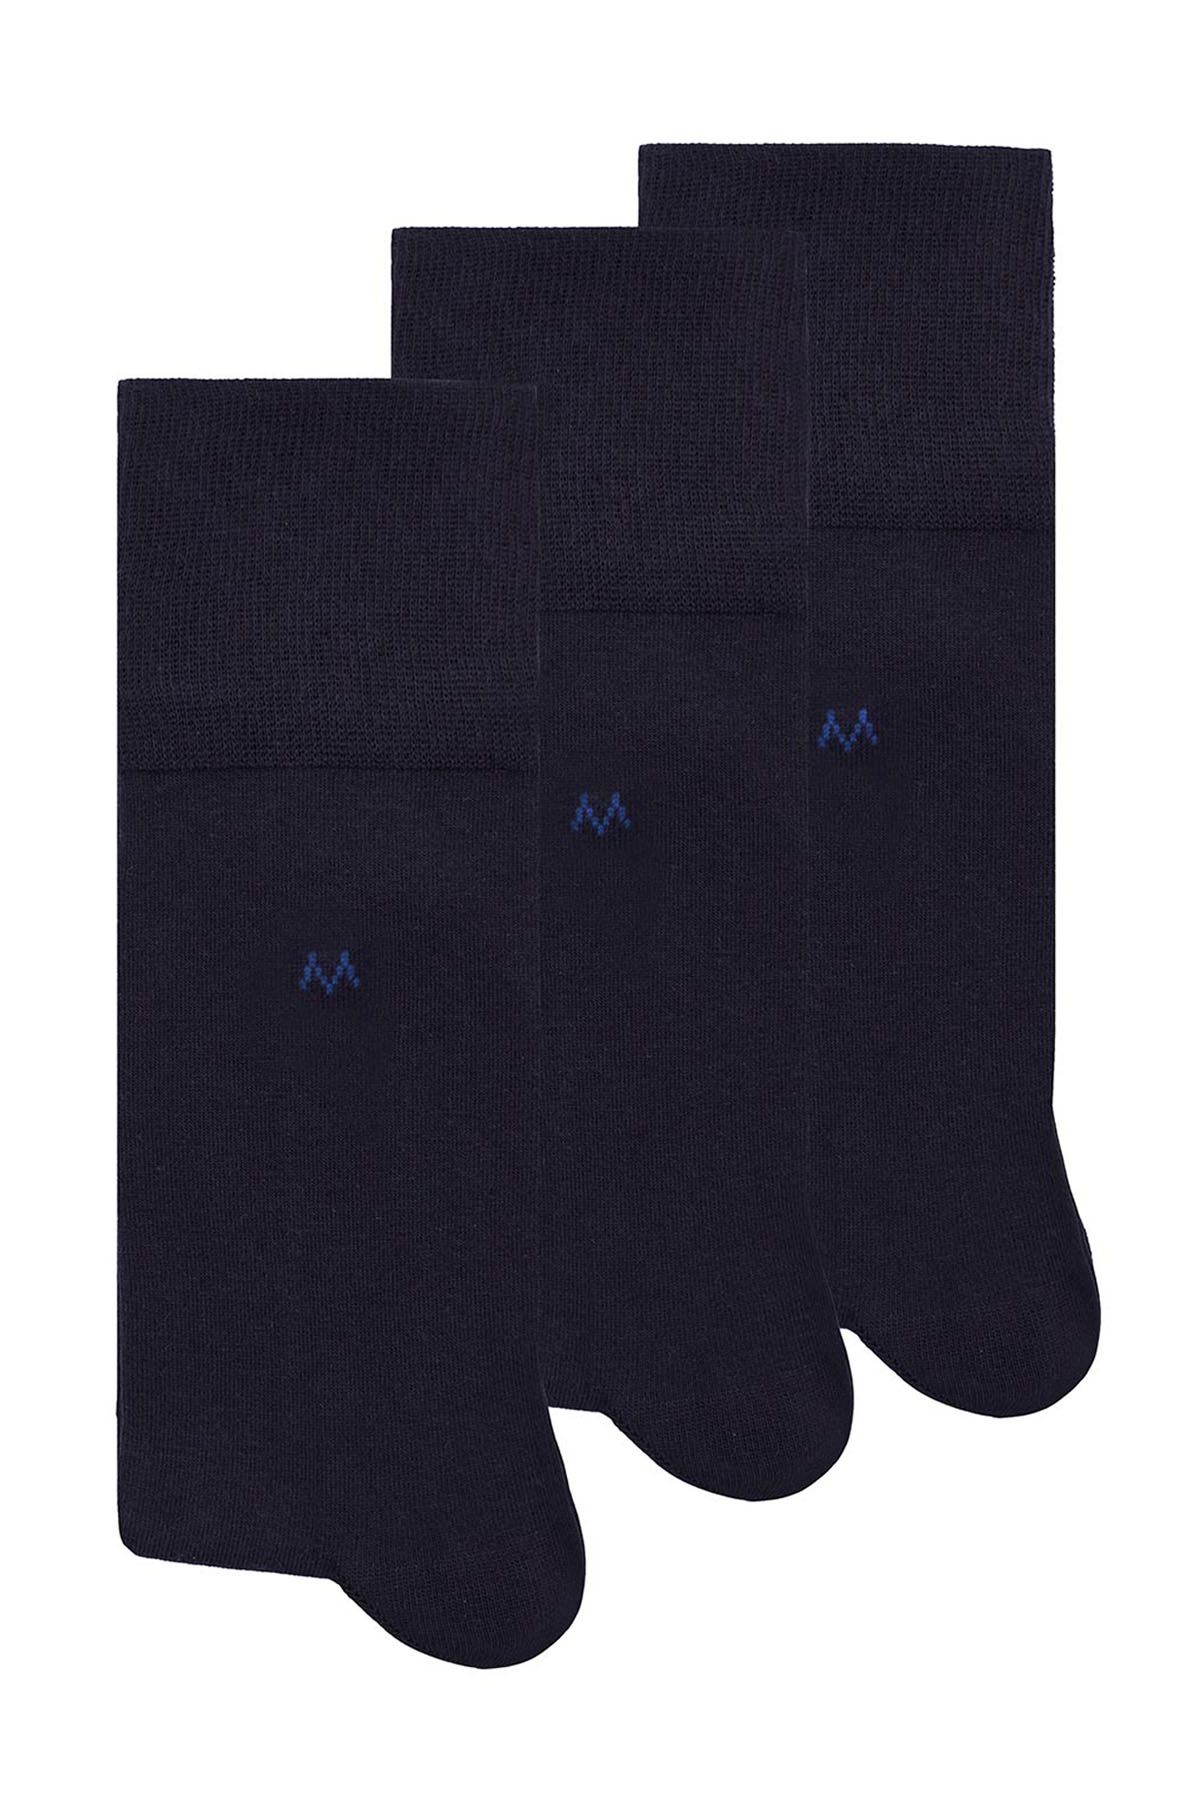 Hemington Pamuklu Lacivert Üçlü Çorap Seti